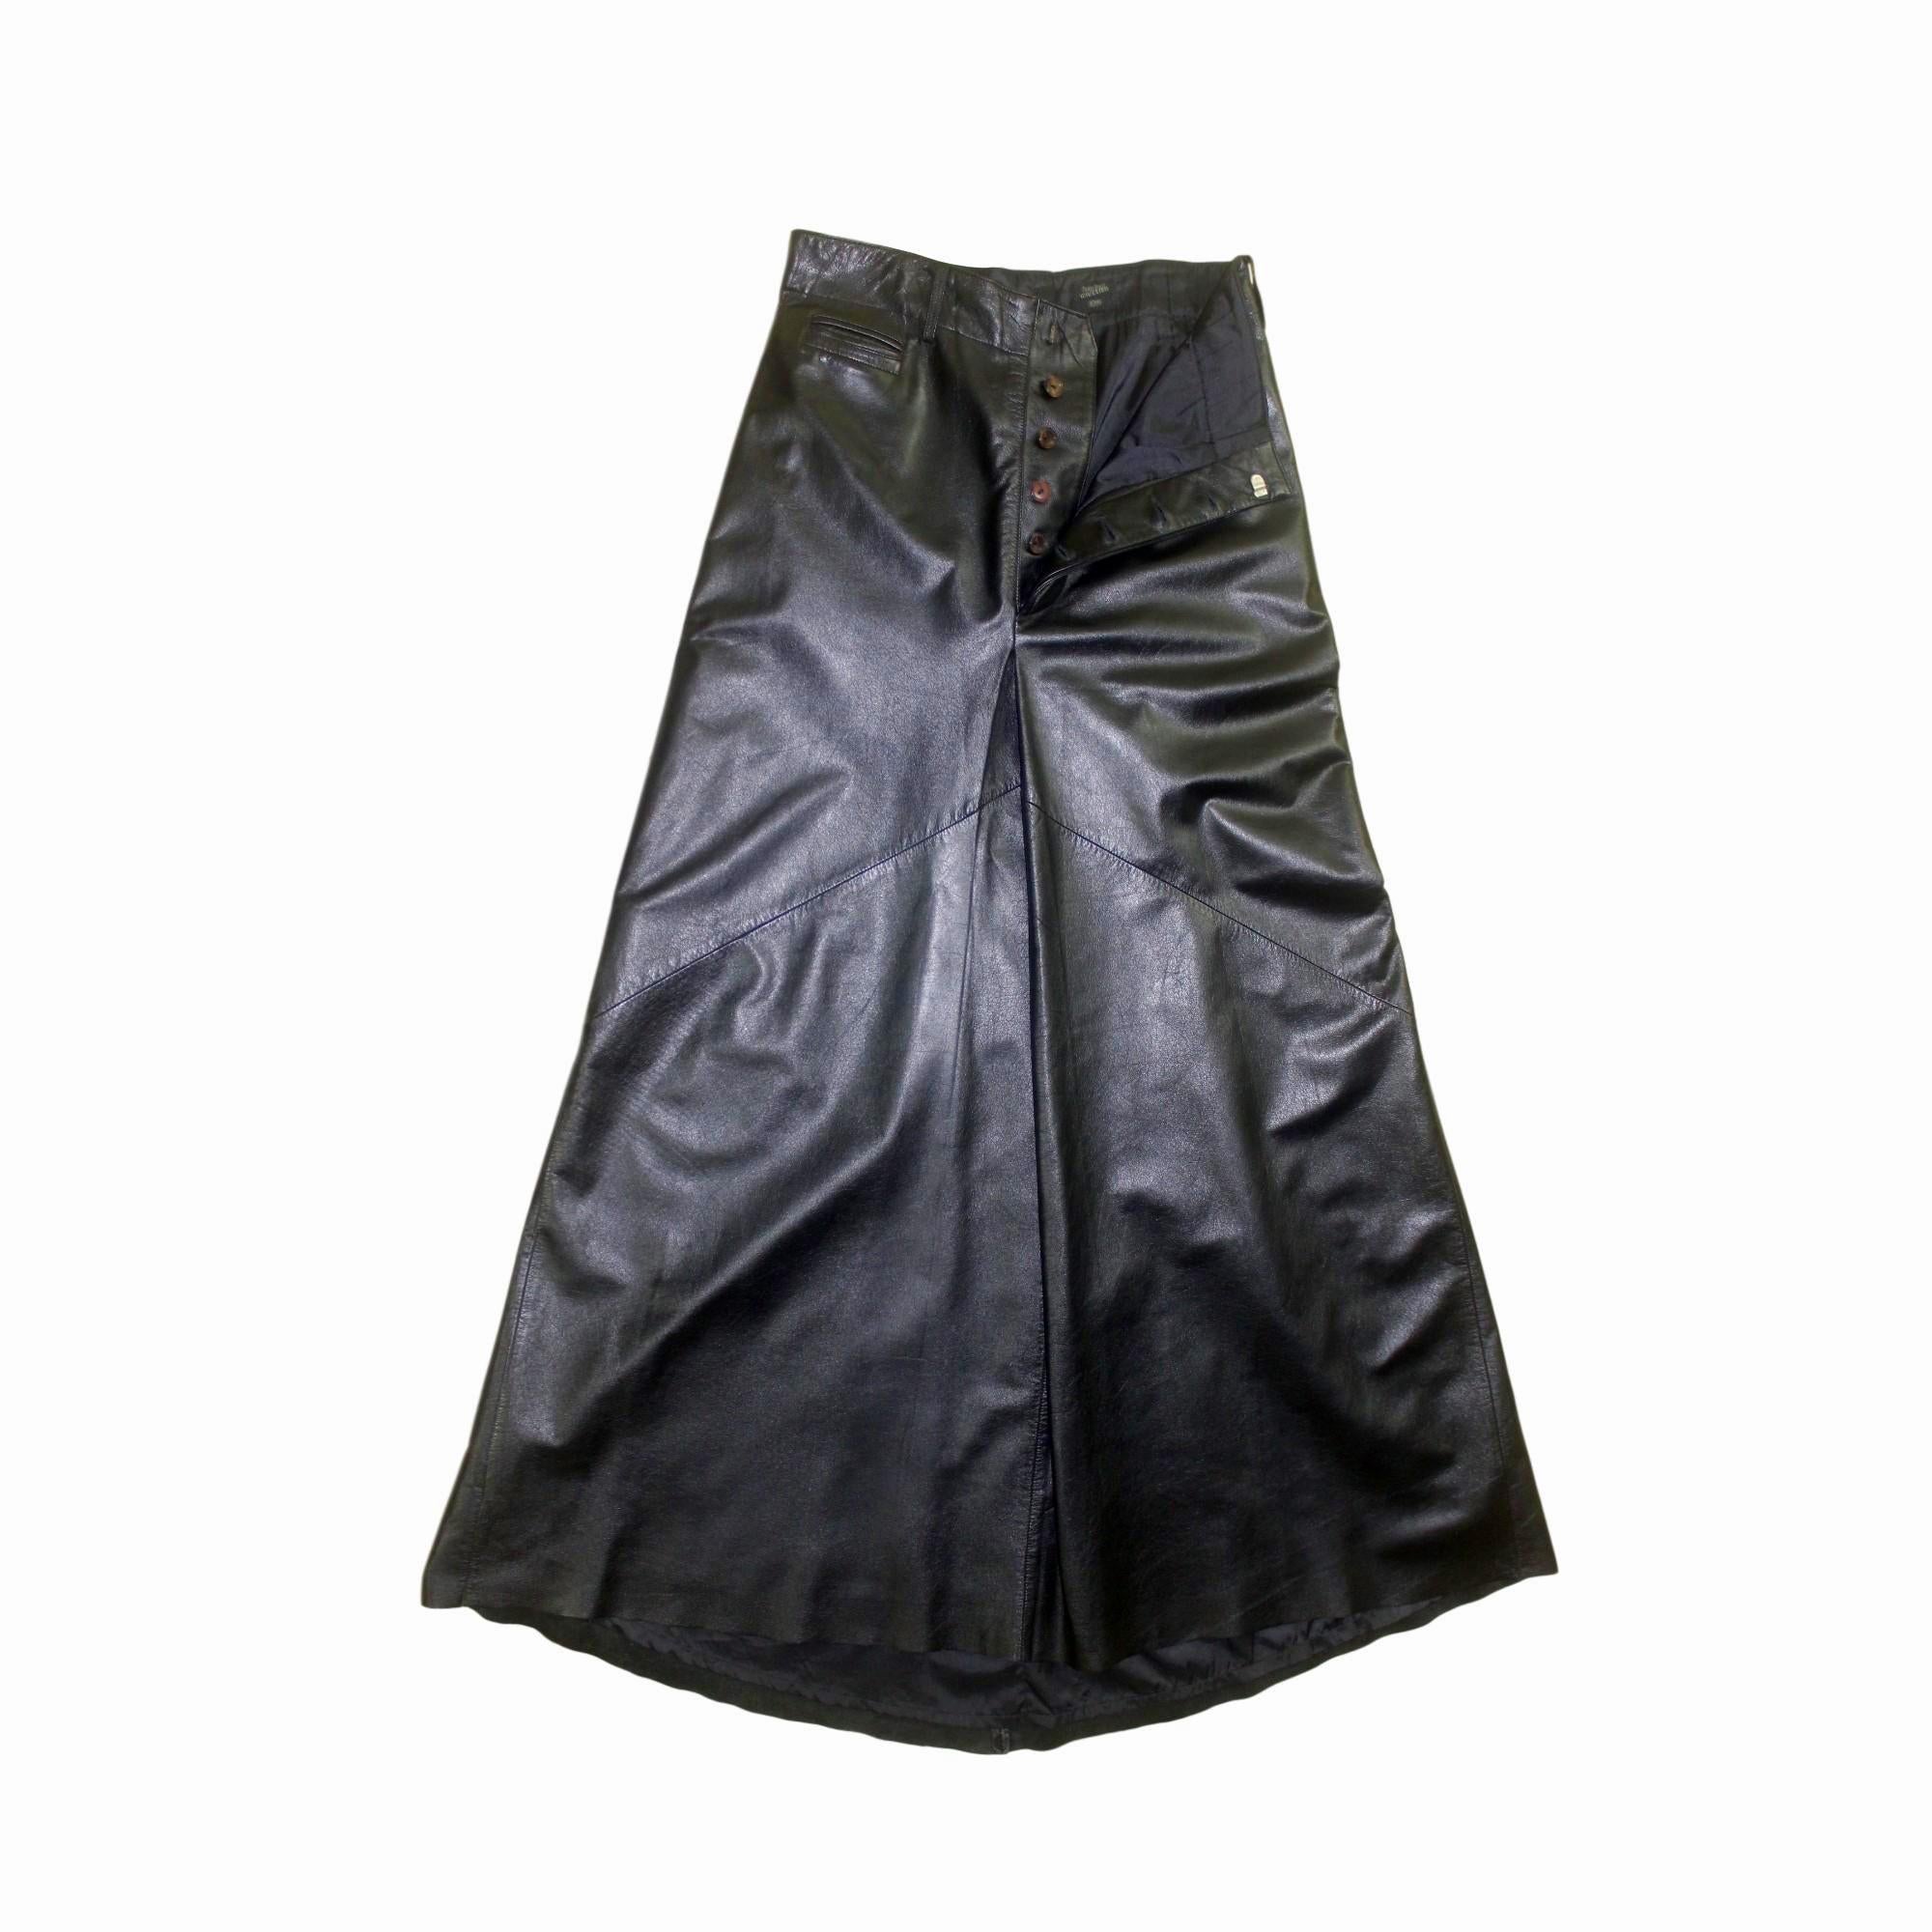 Jean Paul Gaultier Homme 1990s Leather 'Men in Skirts' Full Length 8